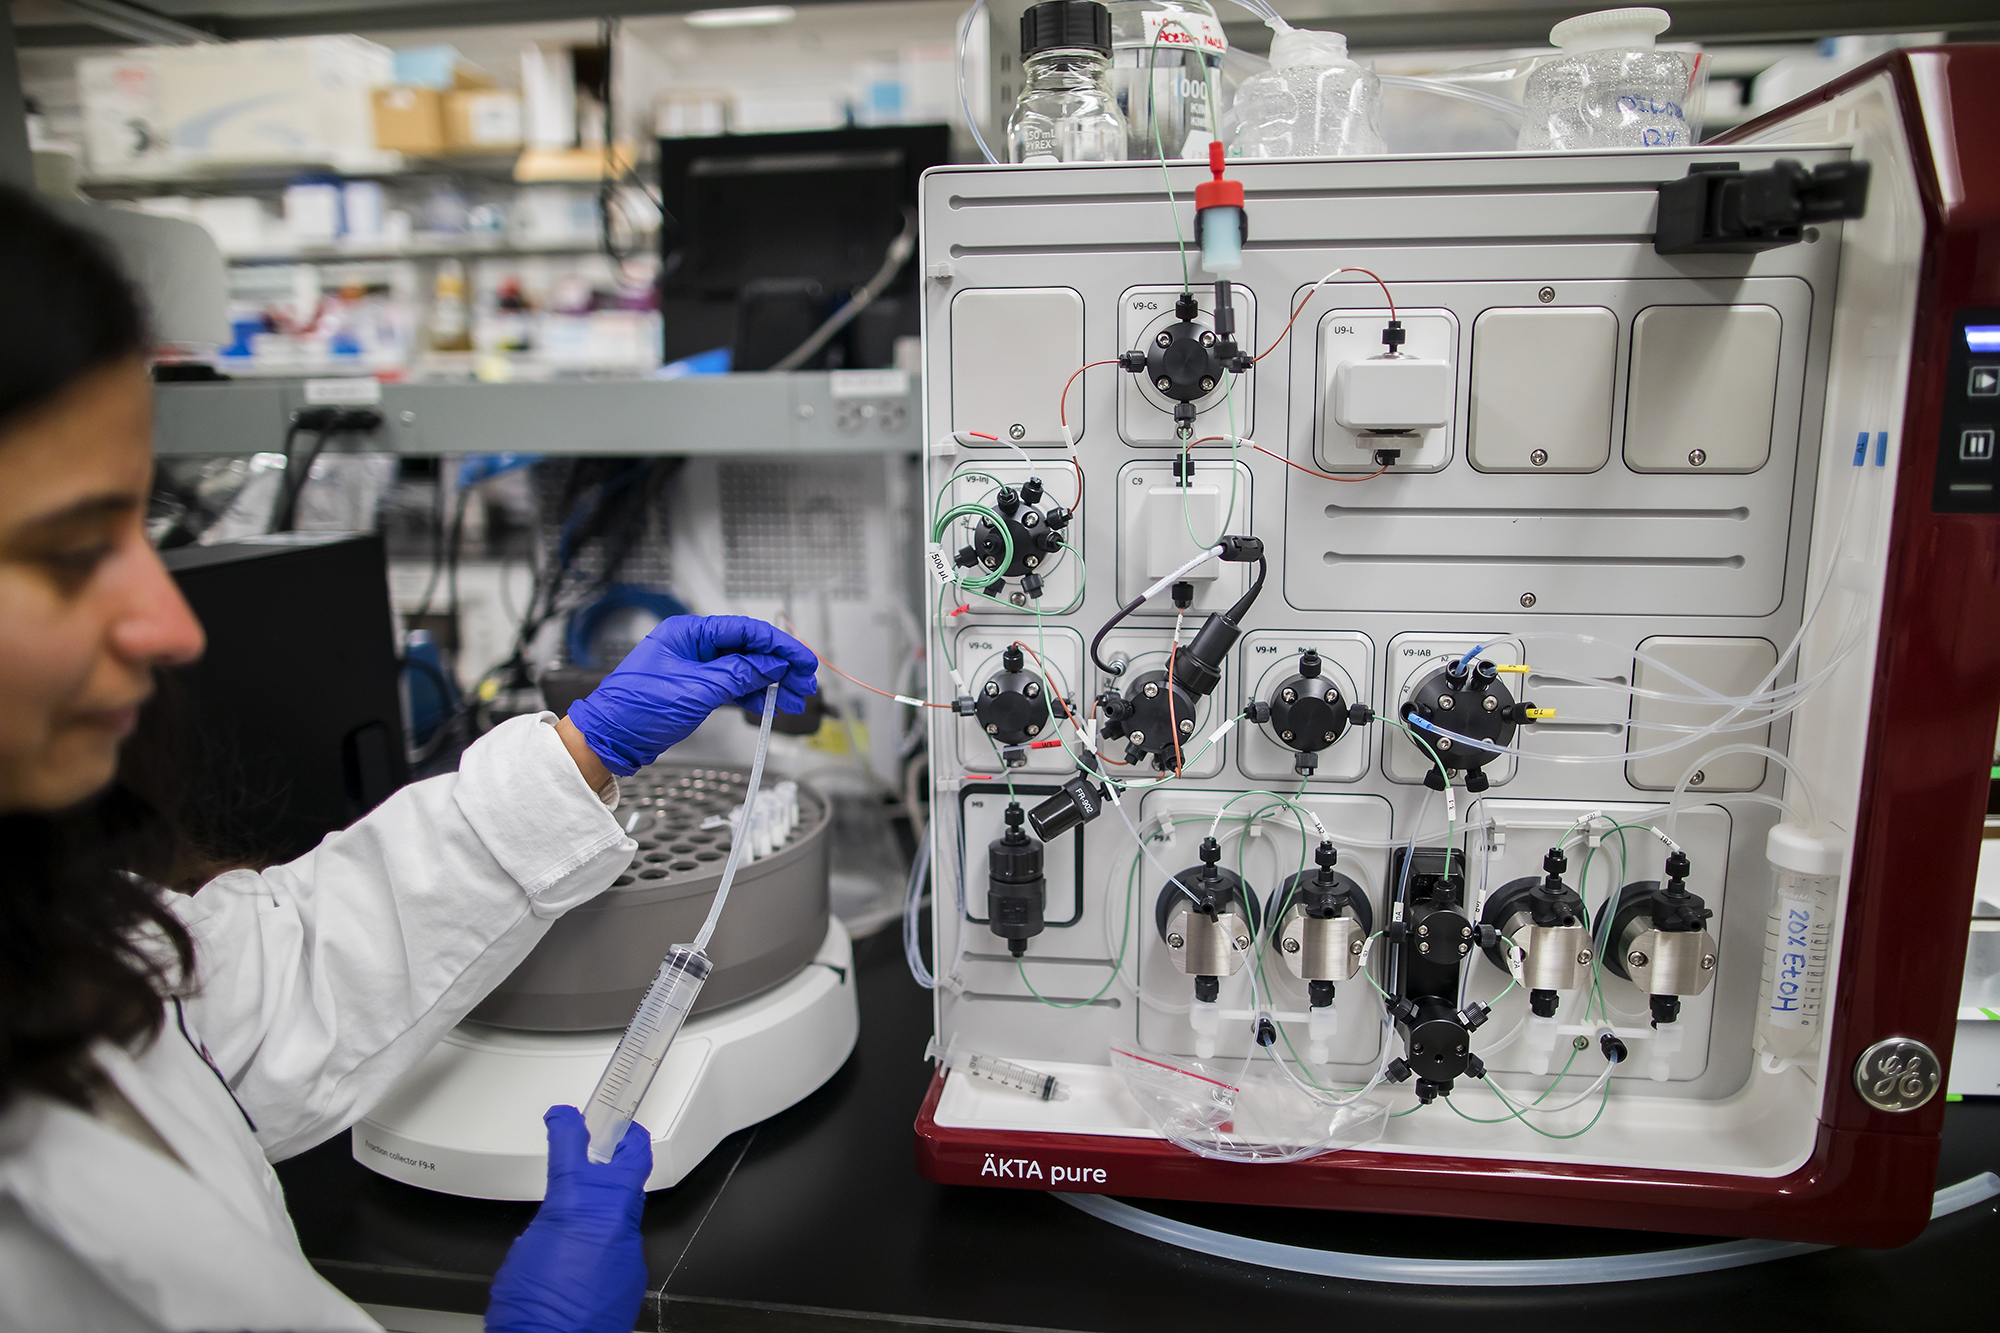 In the Hajishengallis lab, Kavita Hosur inspects equipment